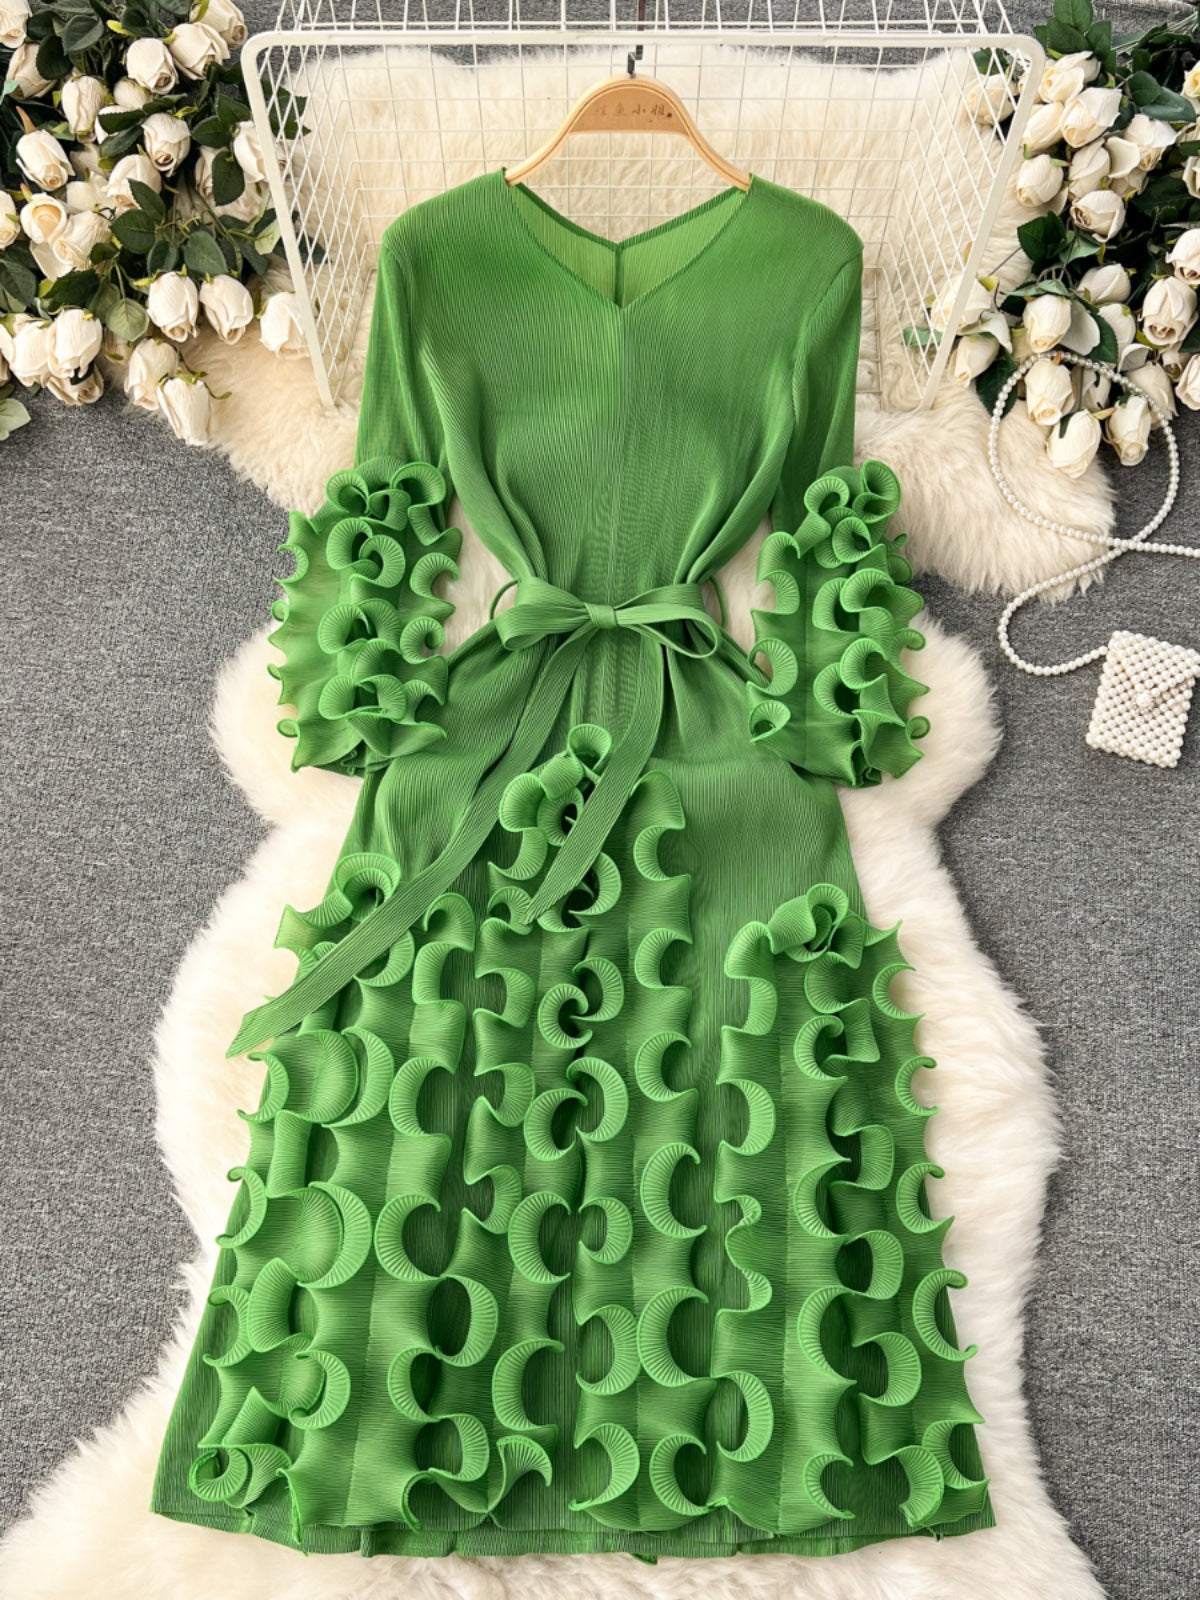 Three-dimensional Ruffled Design 1 New Refined Grace Super Fairy Dress